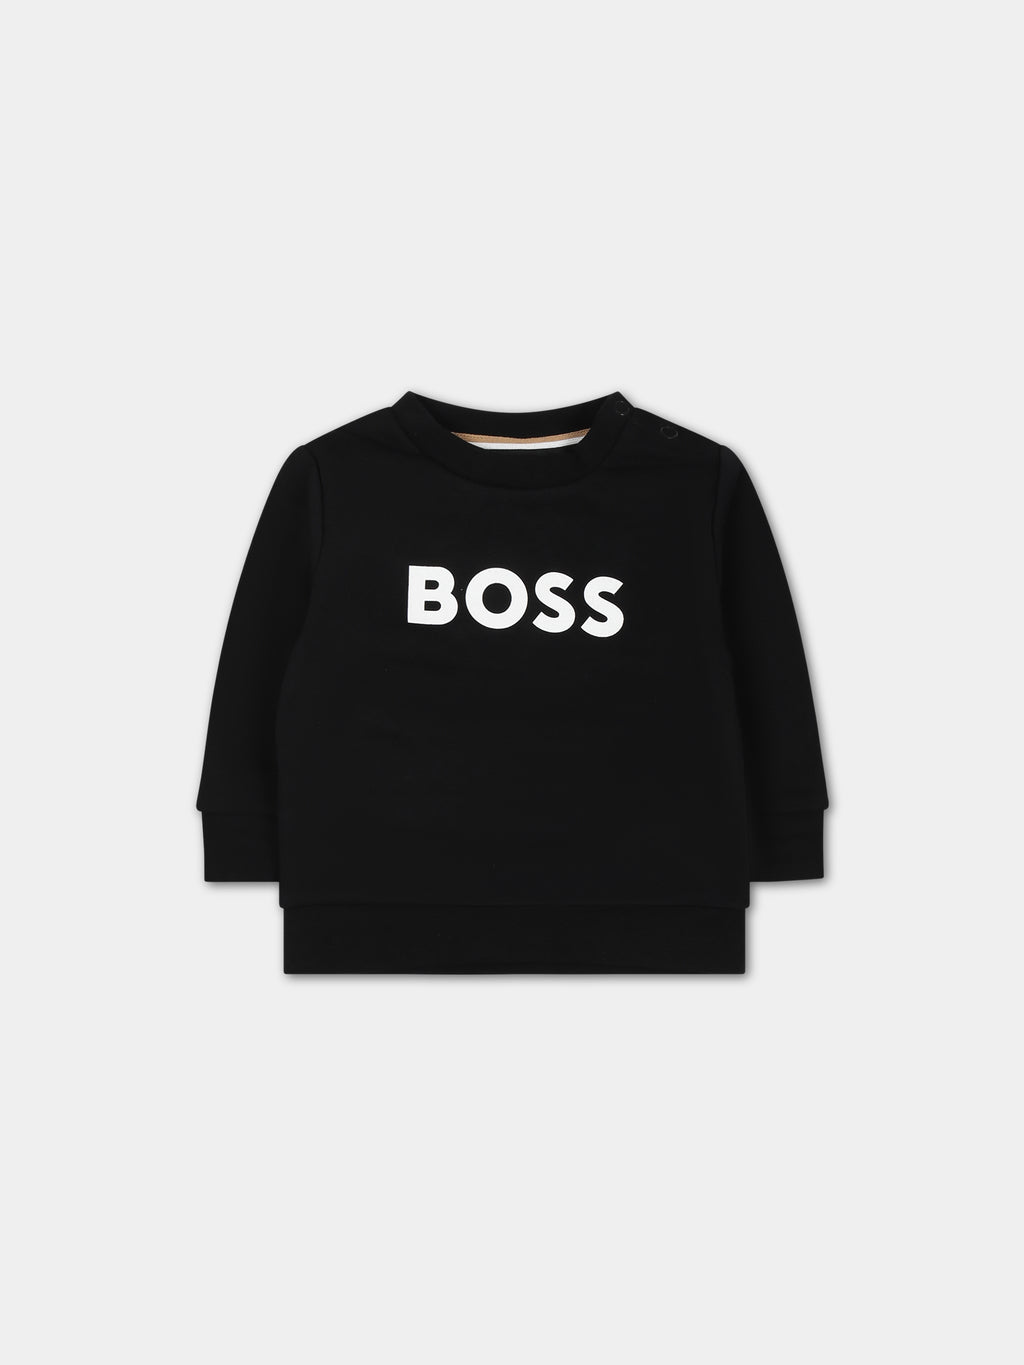 Black sweatshirt with logo for baby boy